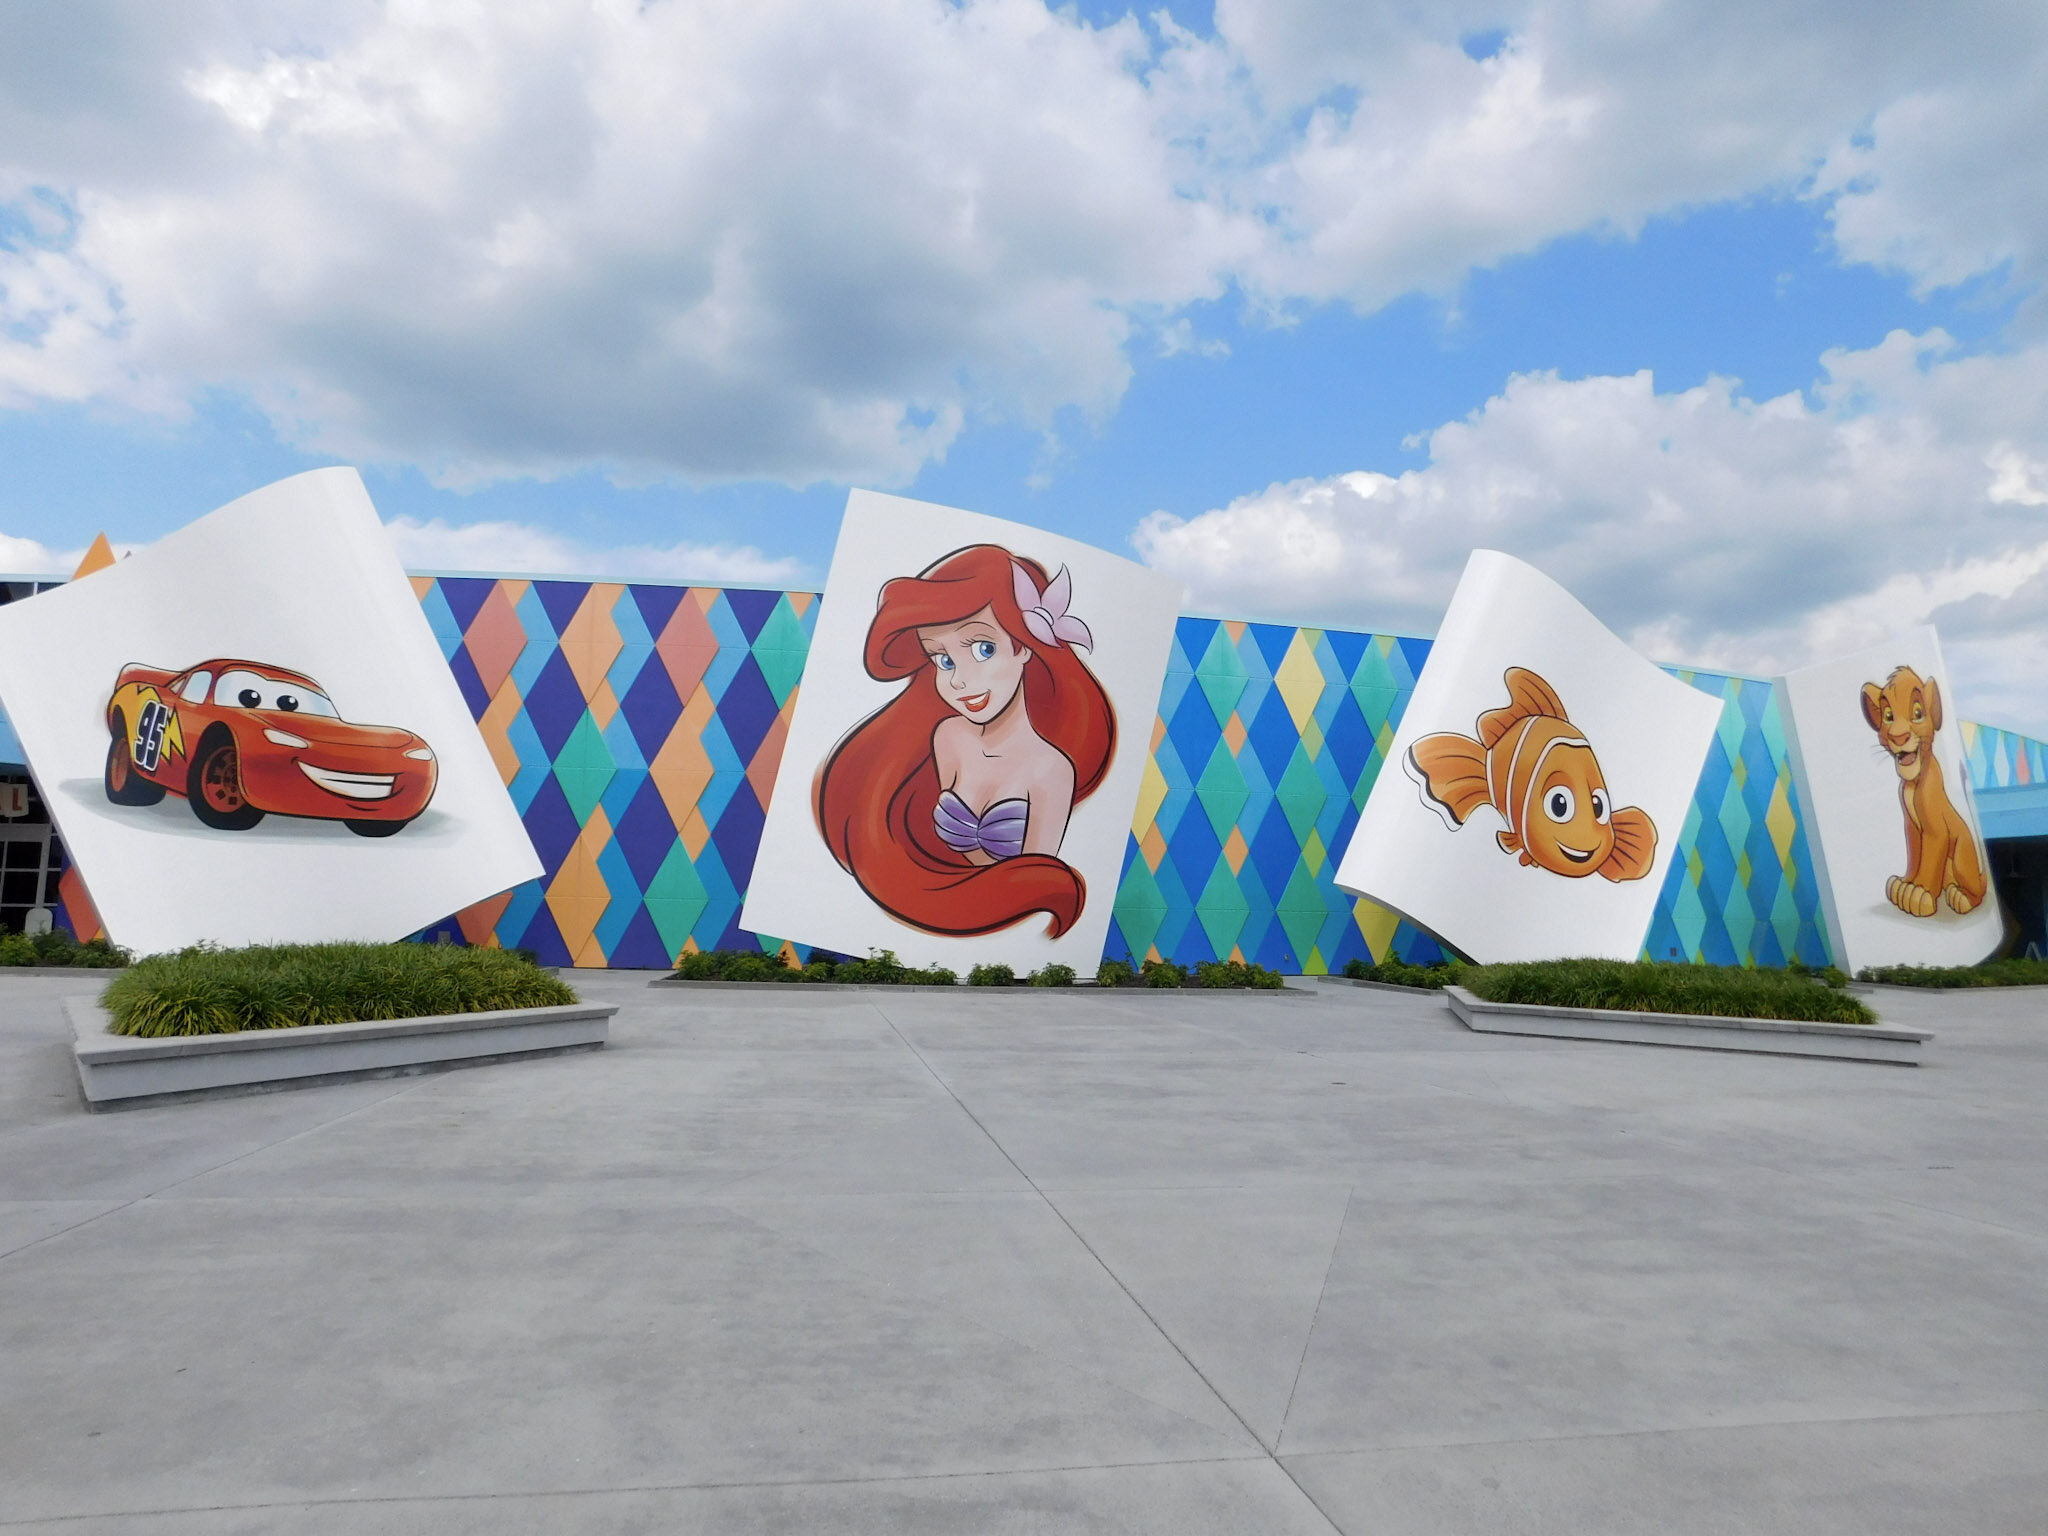 Disneys Art of Animation Resort value resort The Little Mermaid The Lion King Cars Finding Nemo family vacation Disney Travel Agent